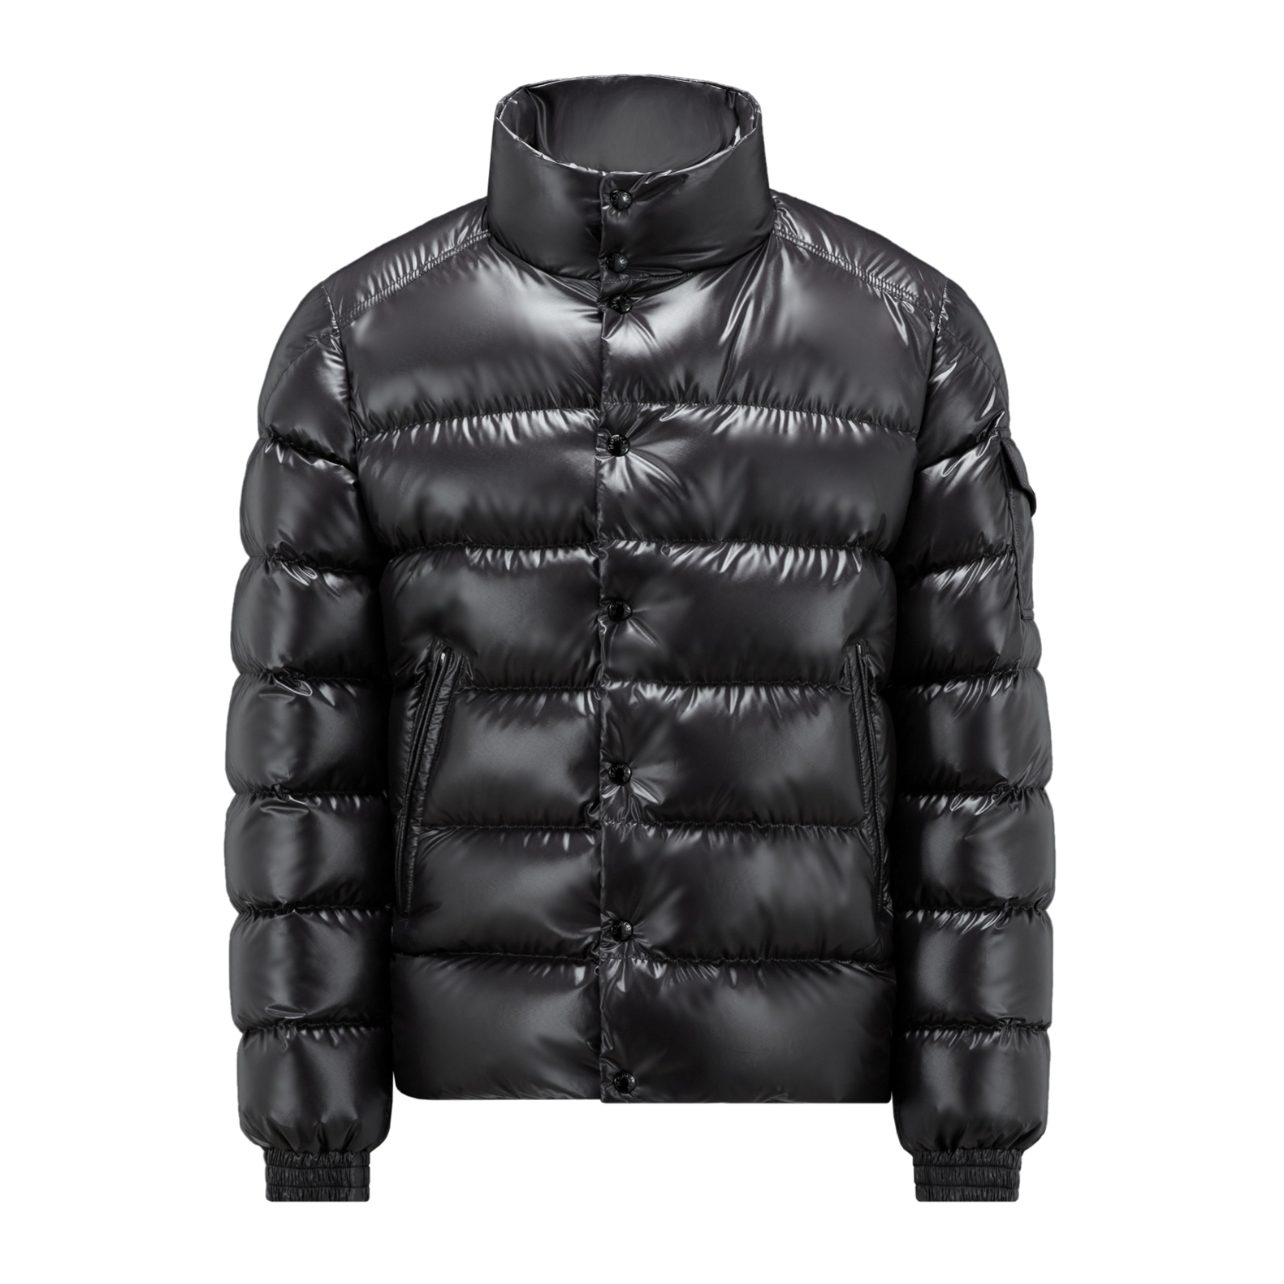 Moncler black puffer jacket with zipper pockets